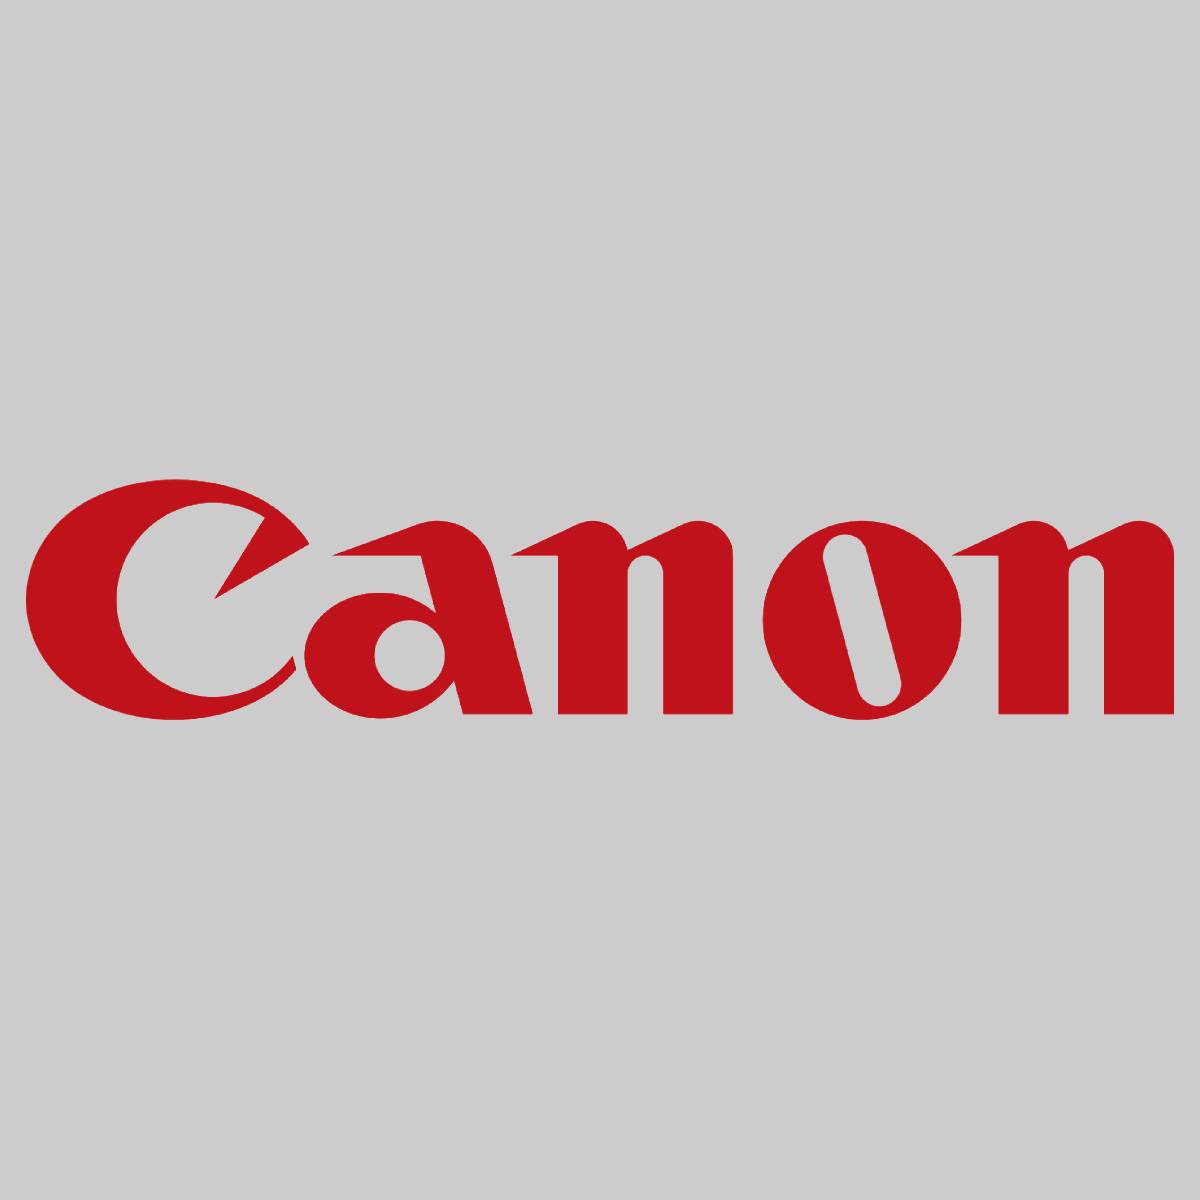 "Originální Canon C-EXV 36 Deck Controller PCB Assy FM4-6094 iR Adv 6055 6065 6075